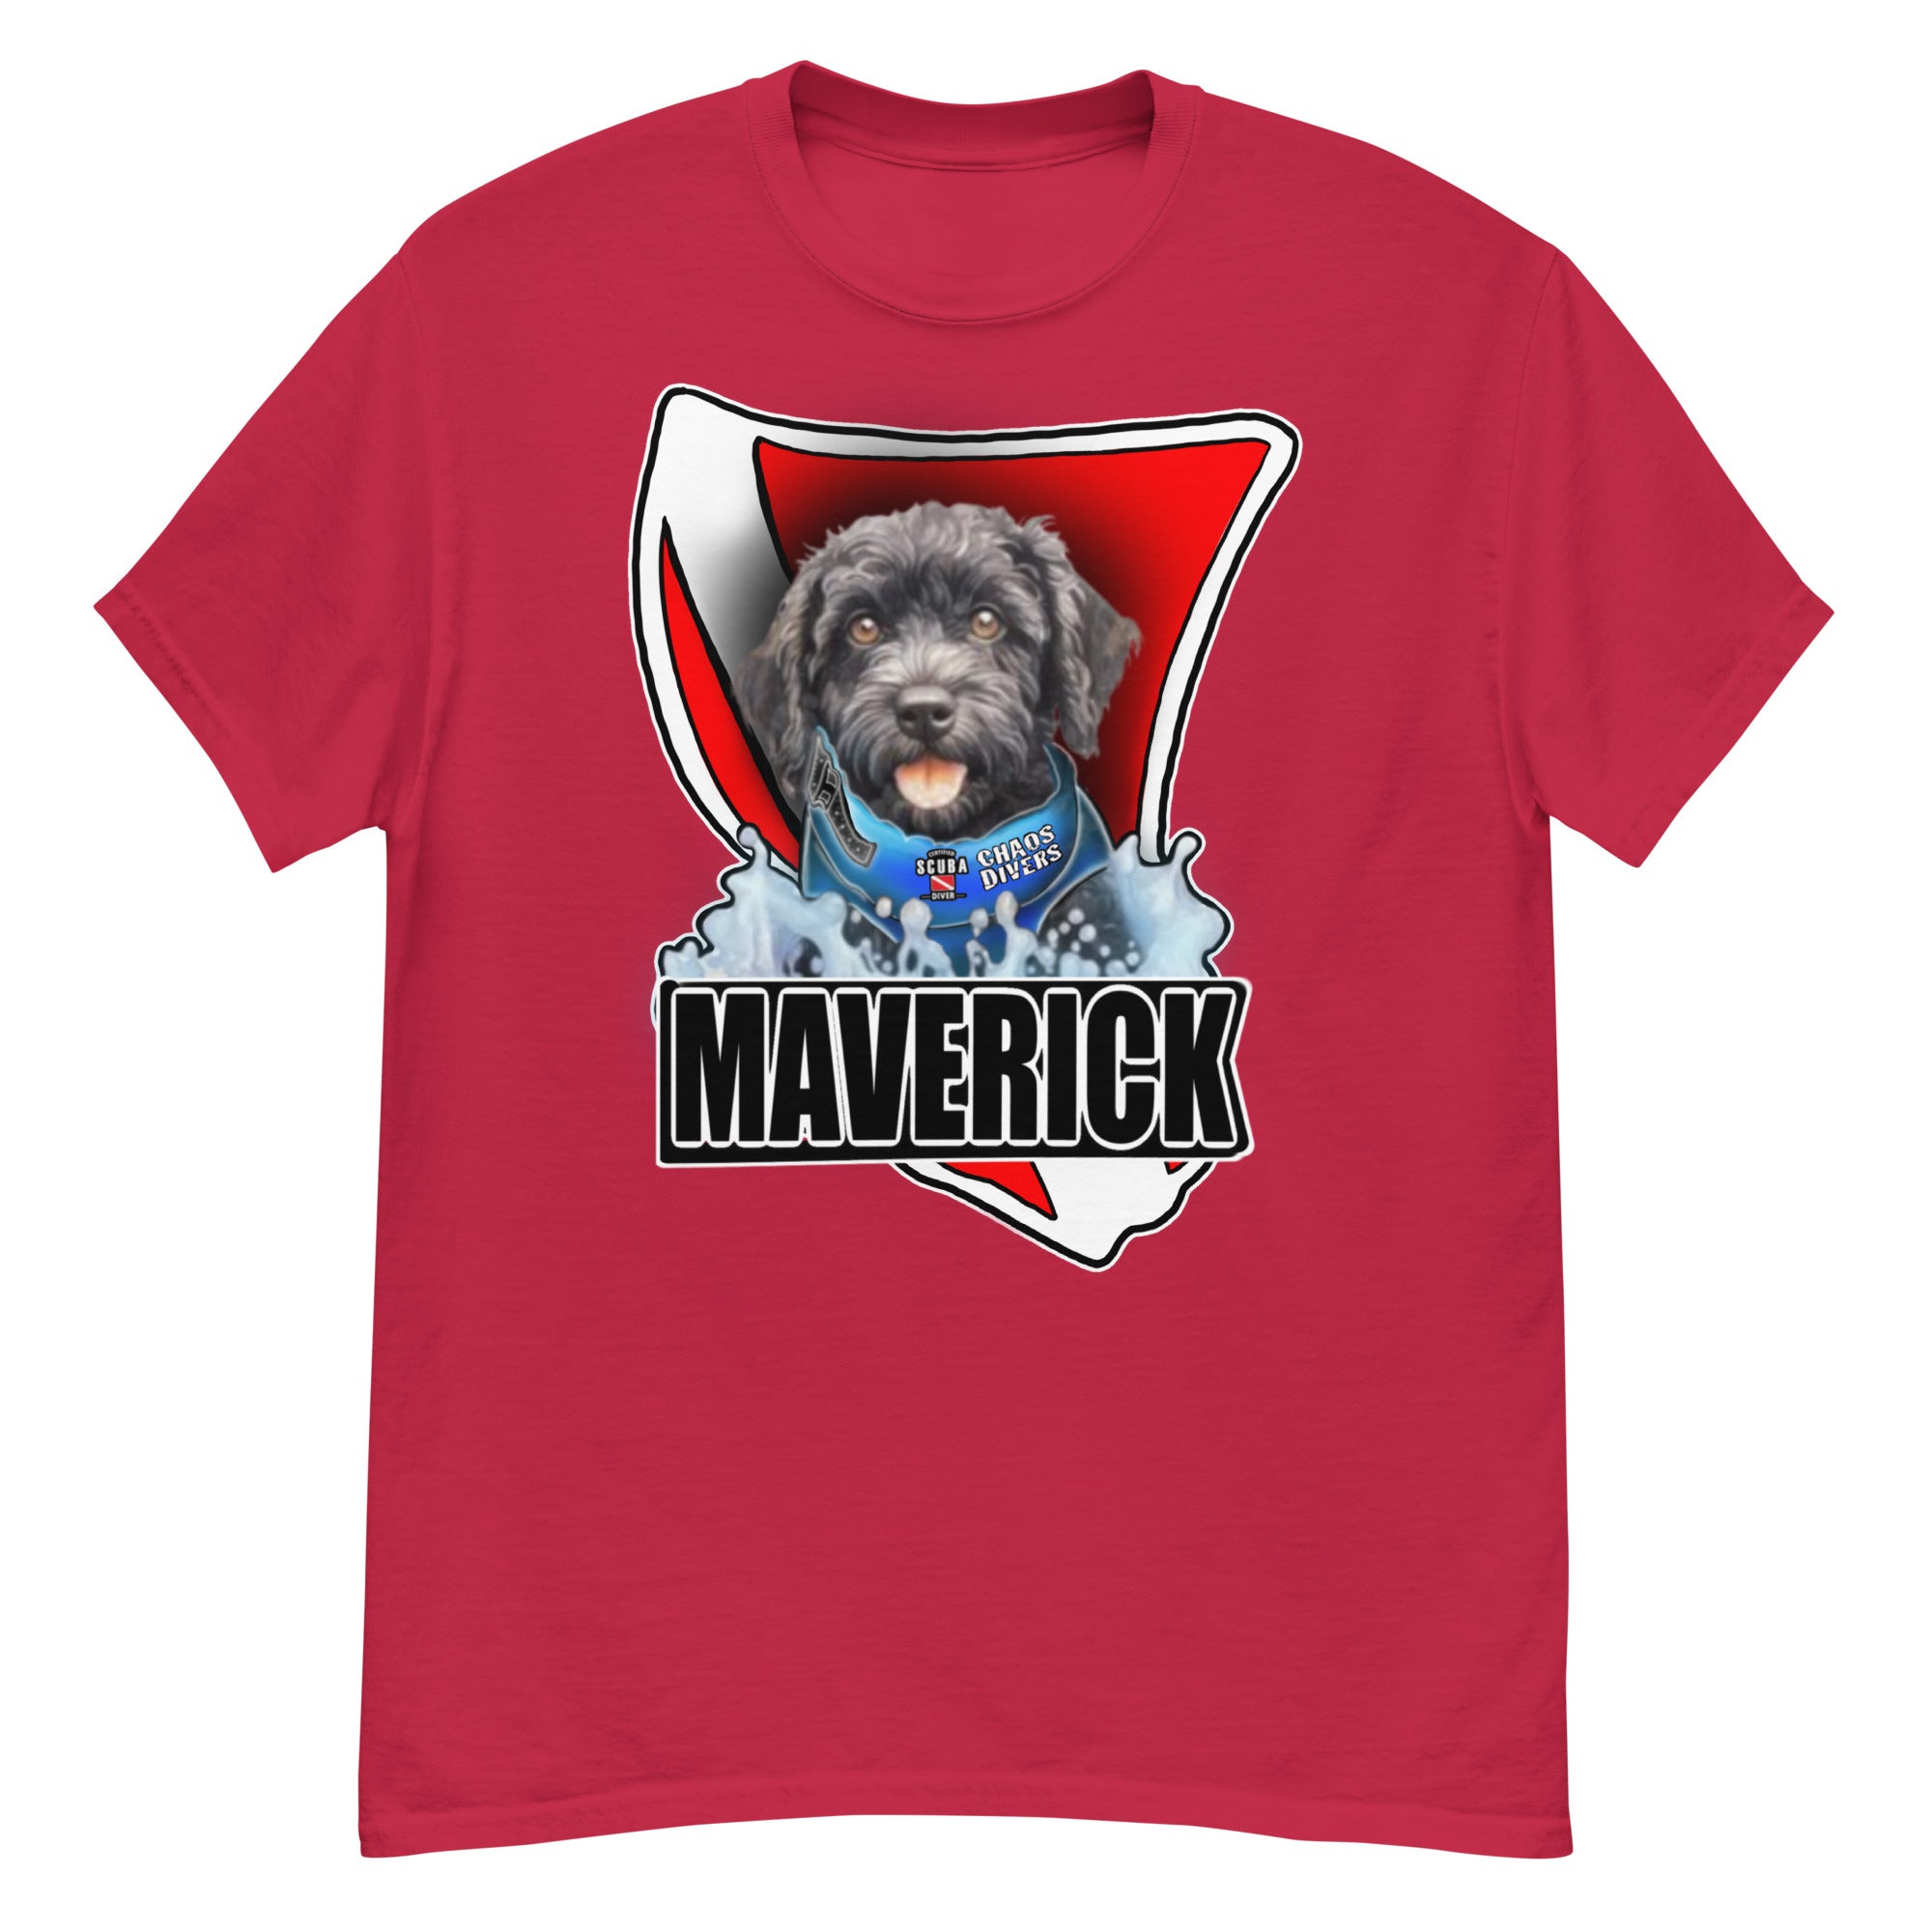 Maverick T-shirt- Designed by PoppeGraphix